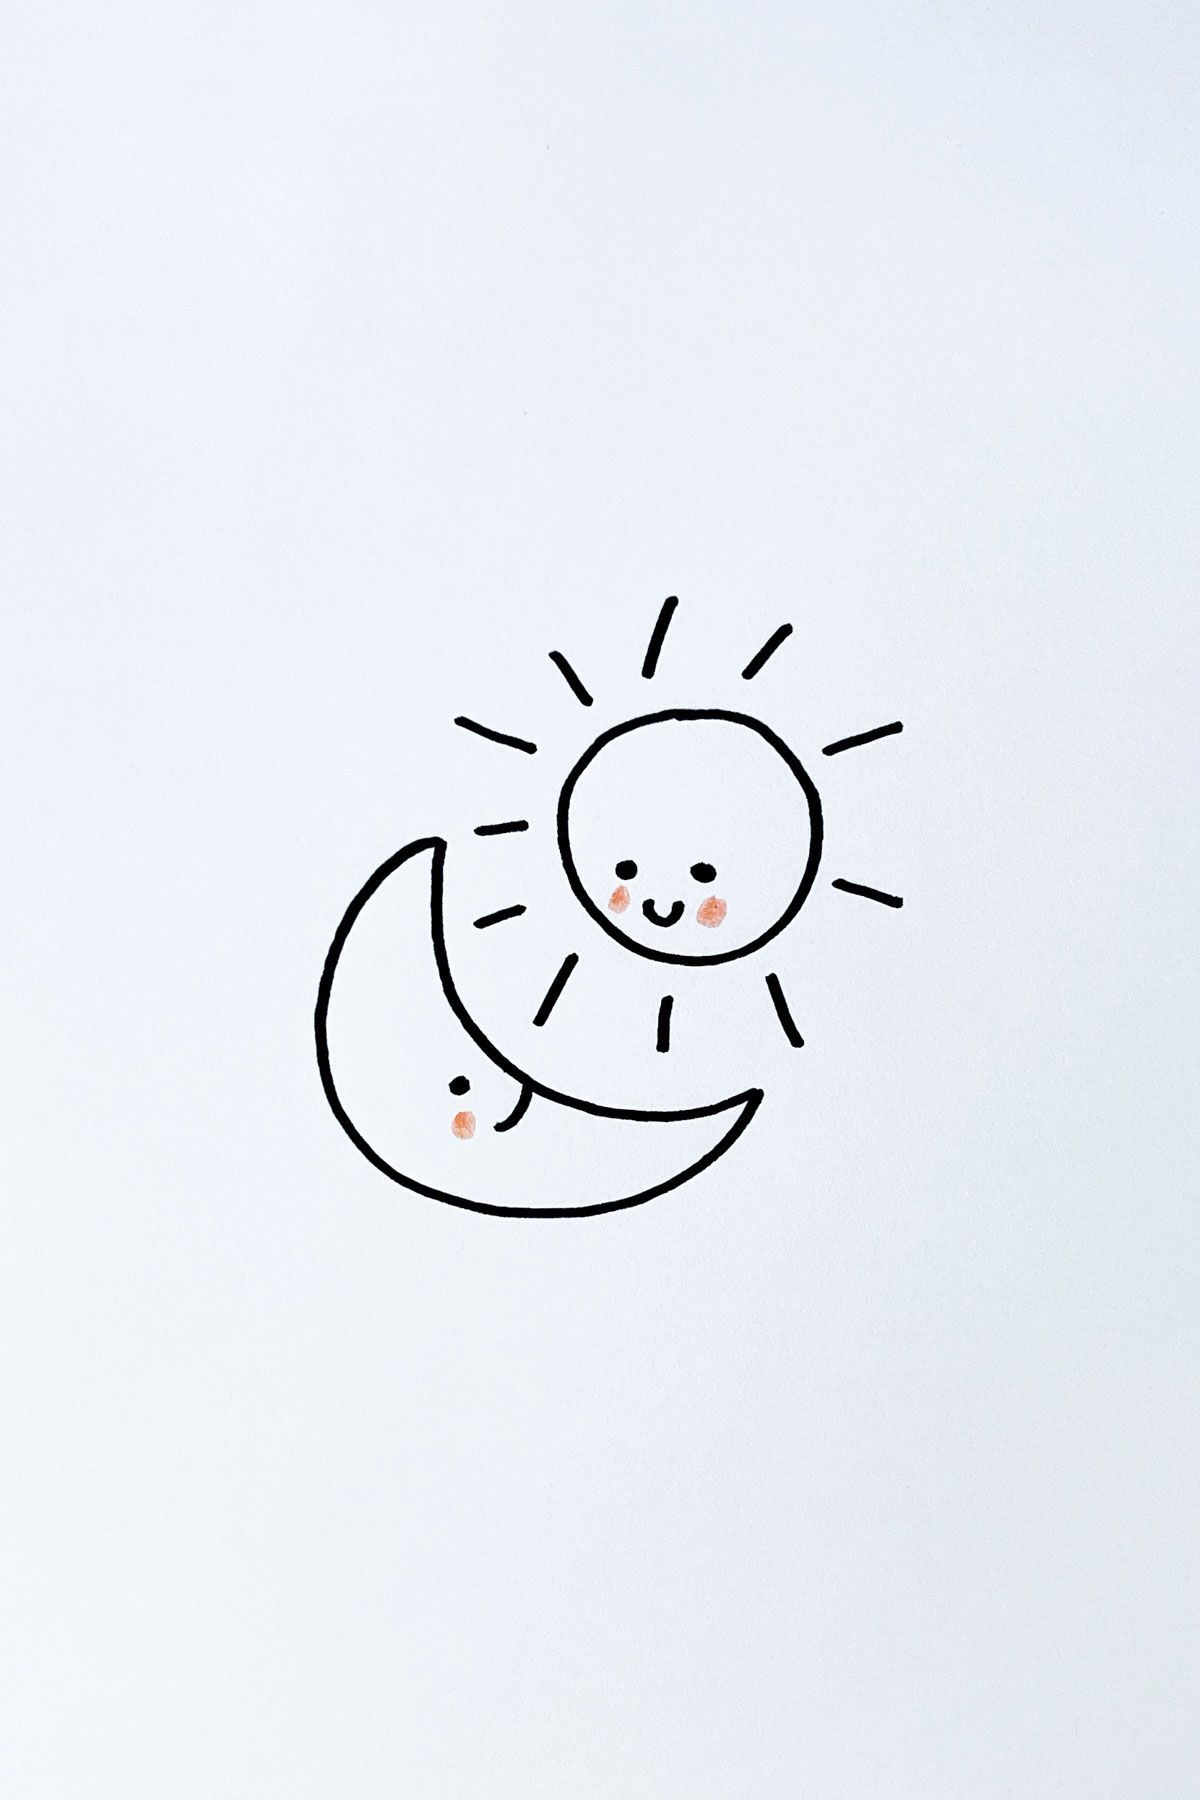 blushing sun and moon drawing